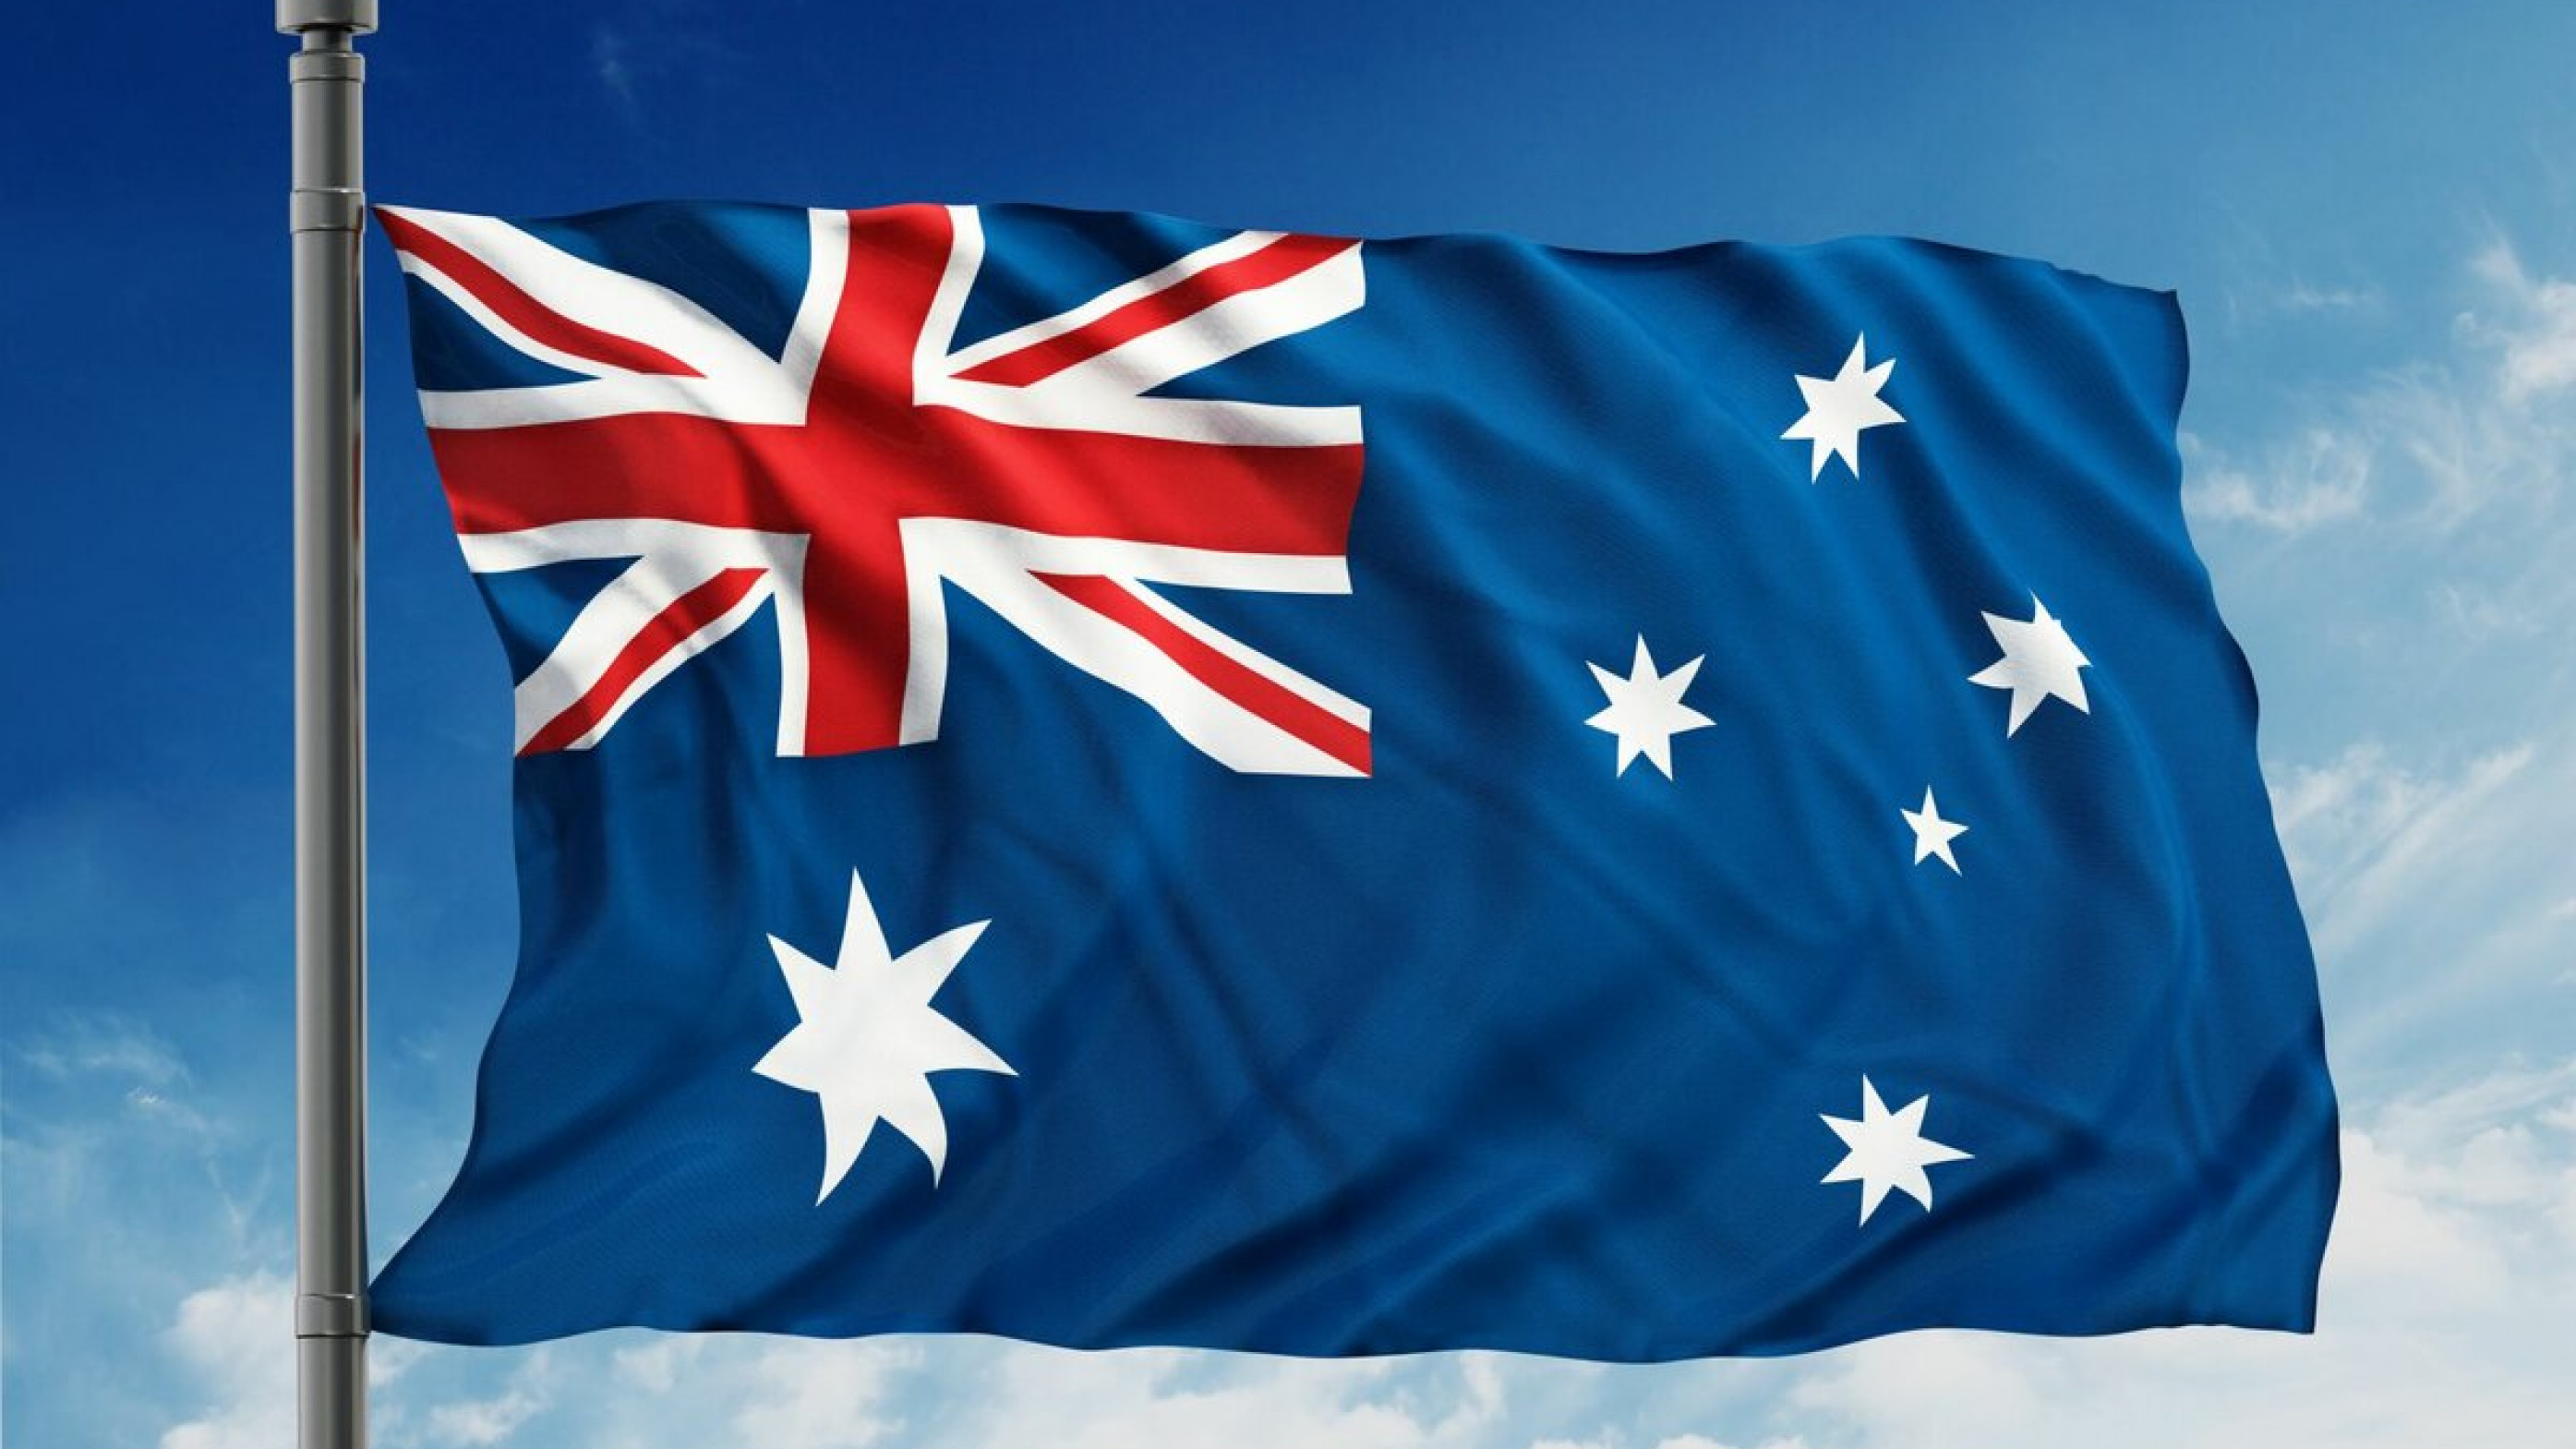 Австр. Флаг Австралия. Флаг австралийского Союза. Национальный флаг Австралии. Государственный флаг Австралии.